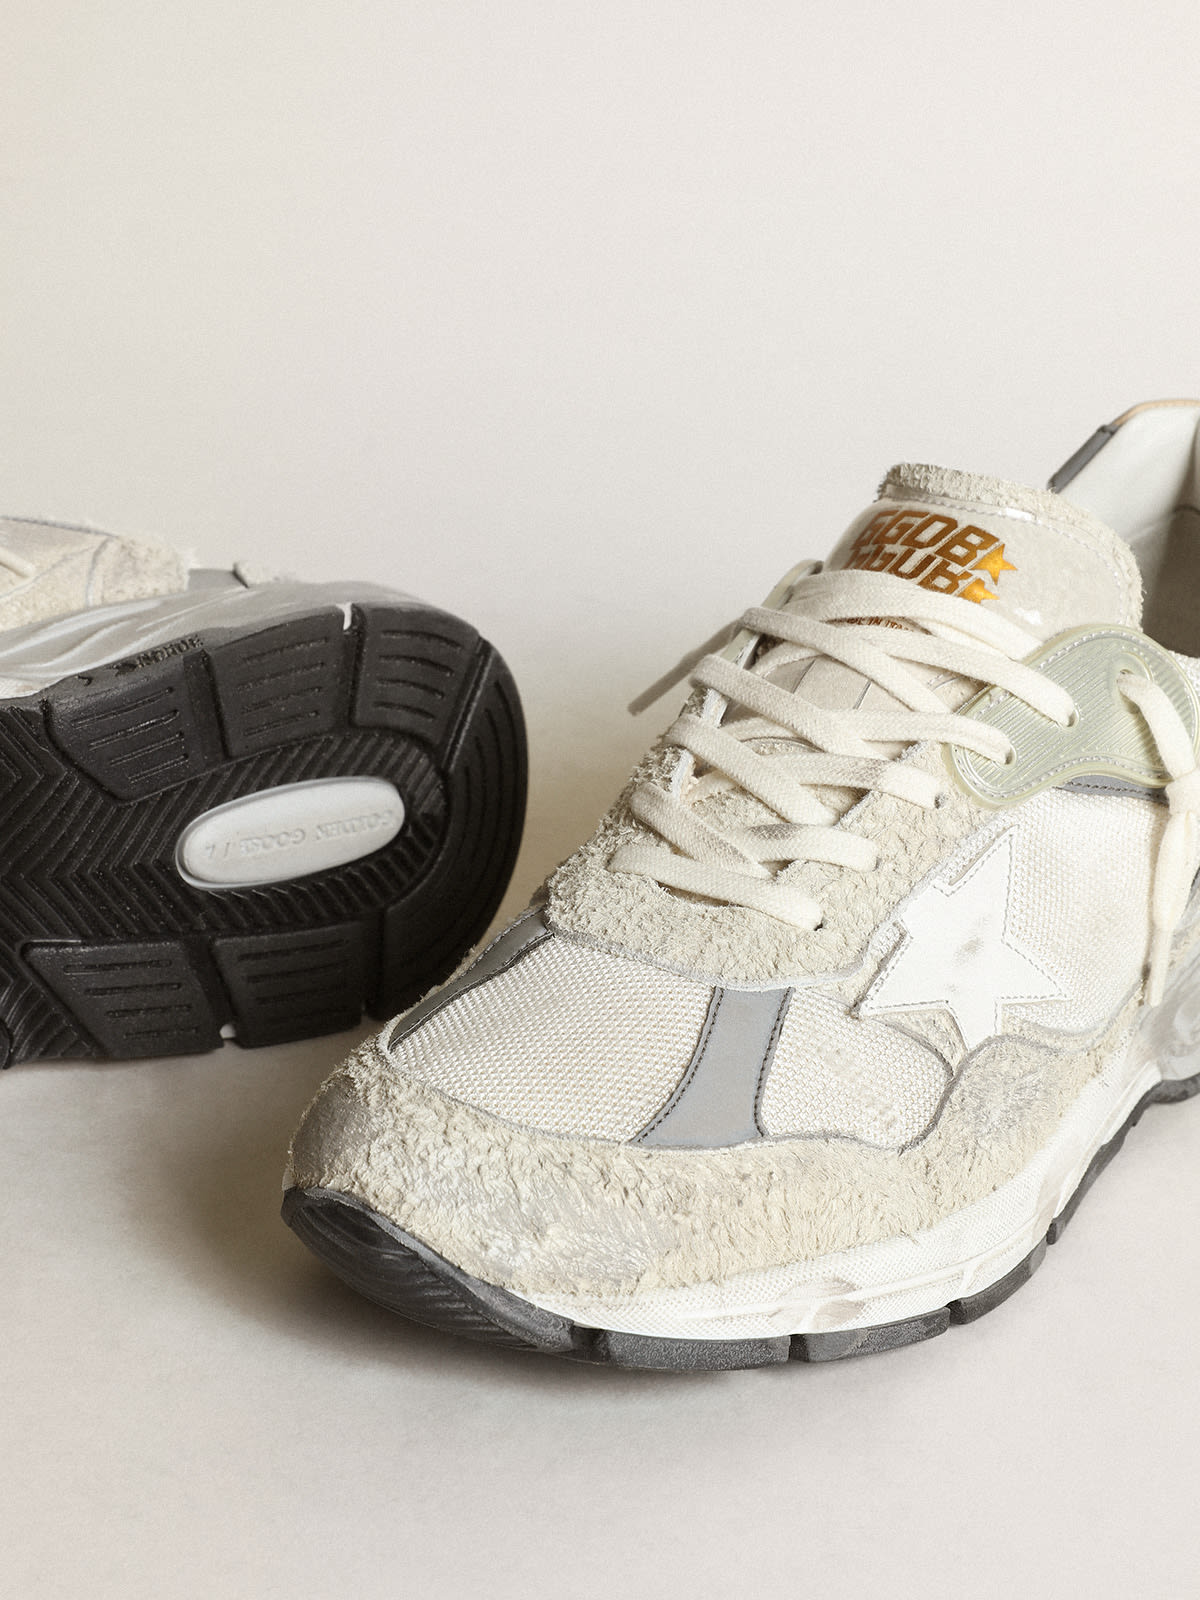 Golden Goose - Sneaker Dad-Star in suede bianco e grigio e stella in pelle bianca in 